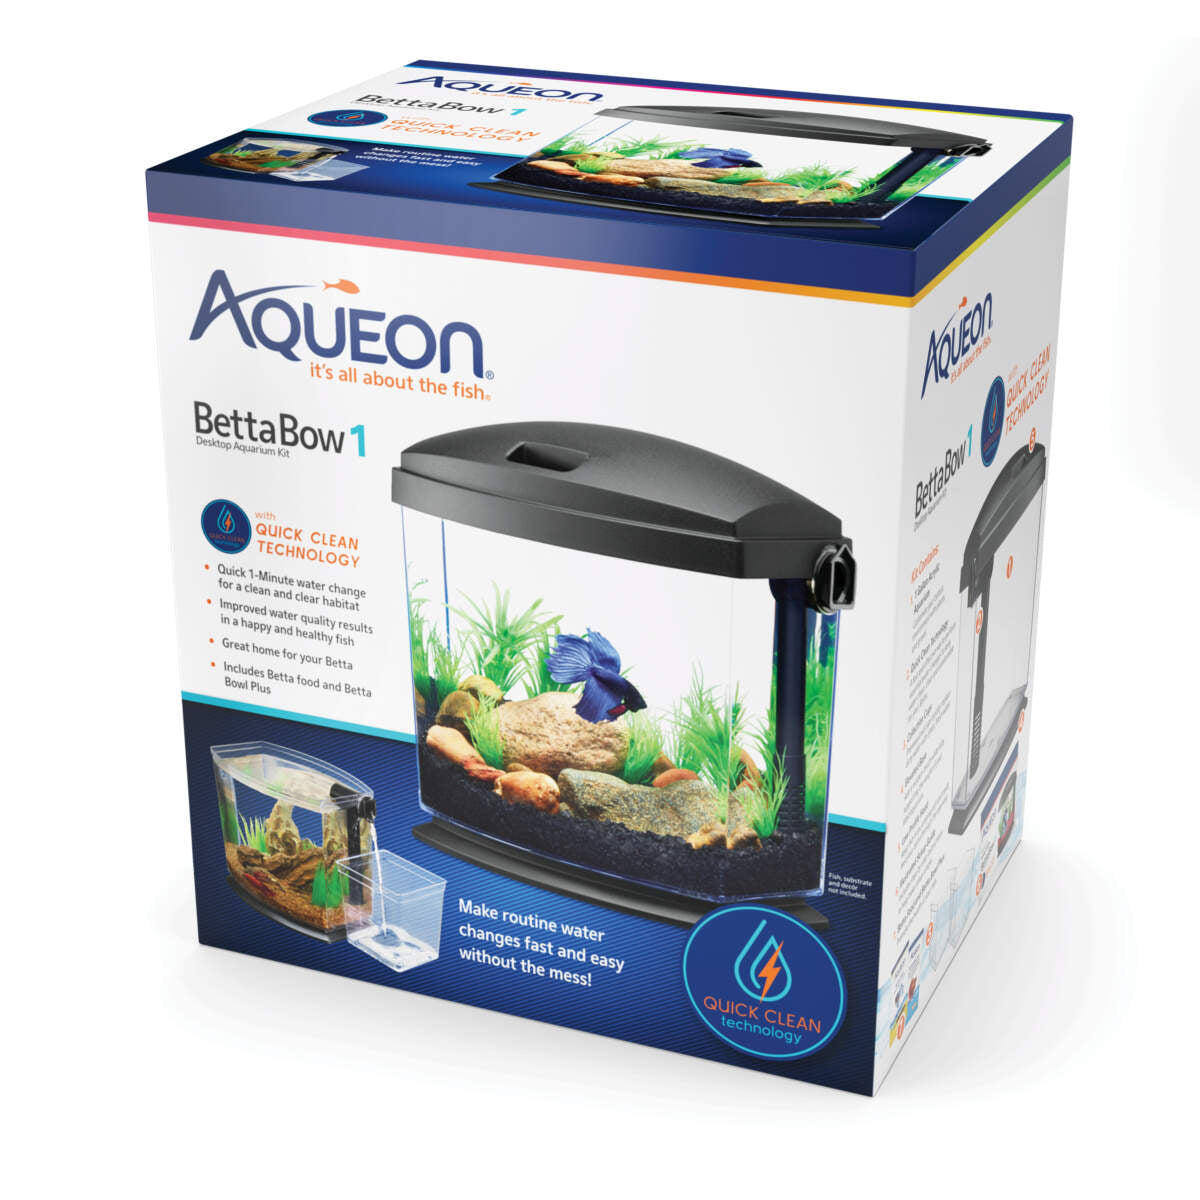 Aqueon BettaBow 1 Aquarium Kit with Quick Clean Technology